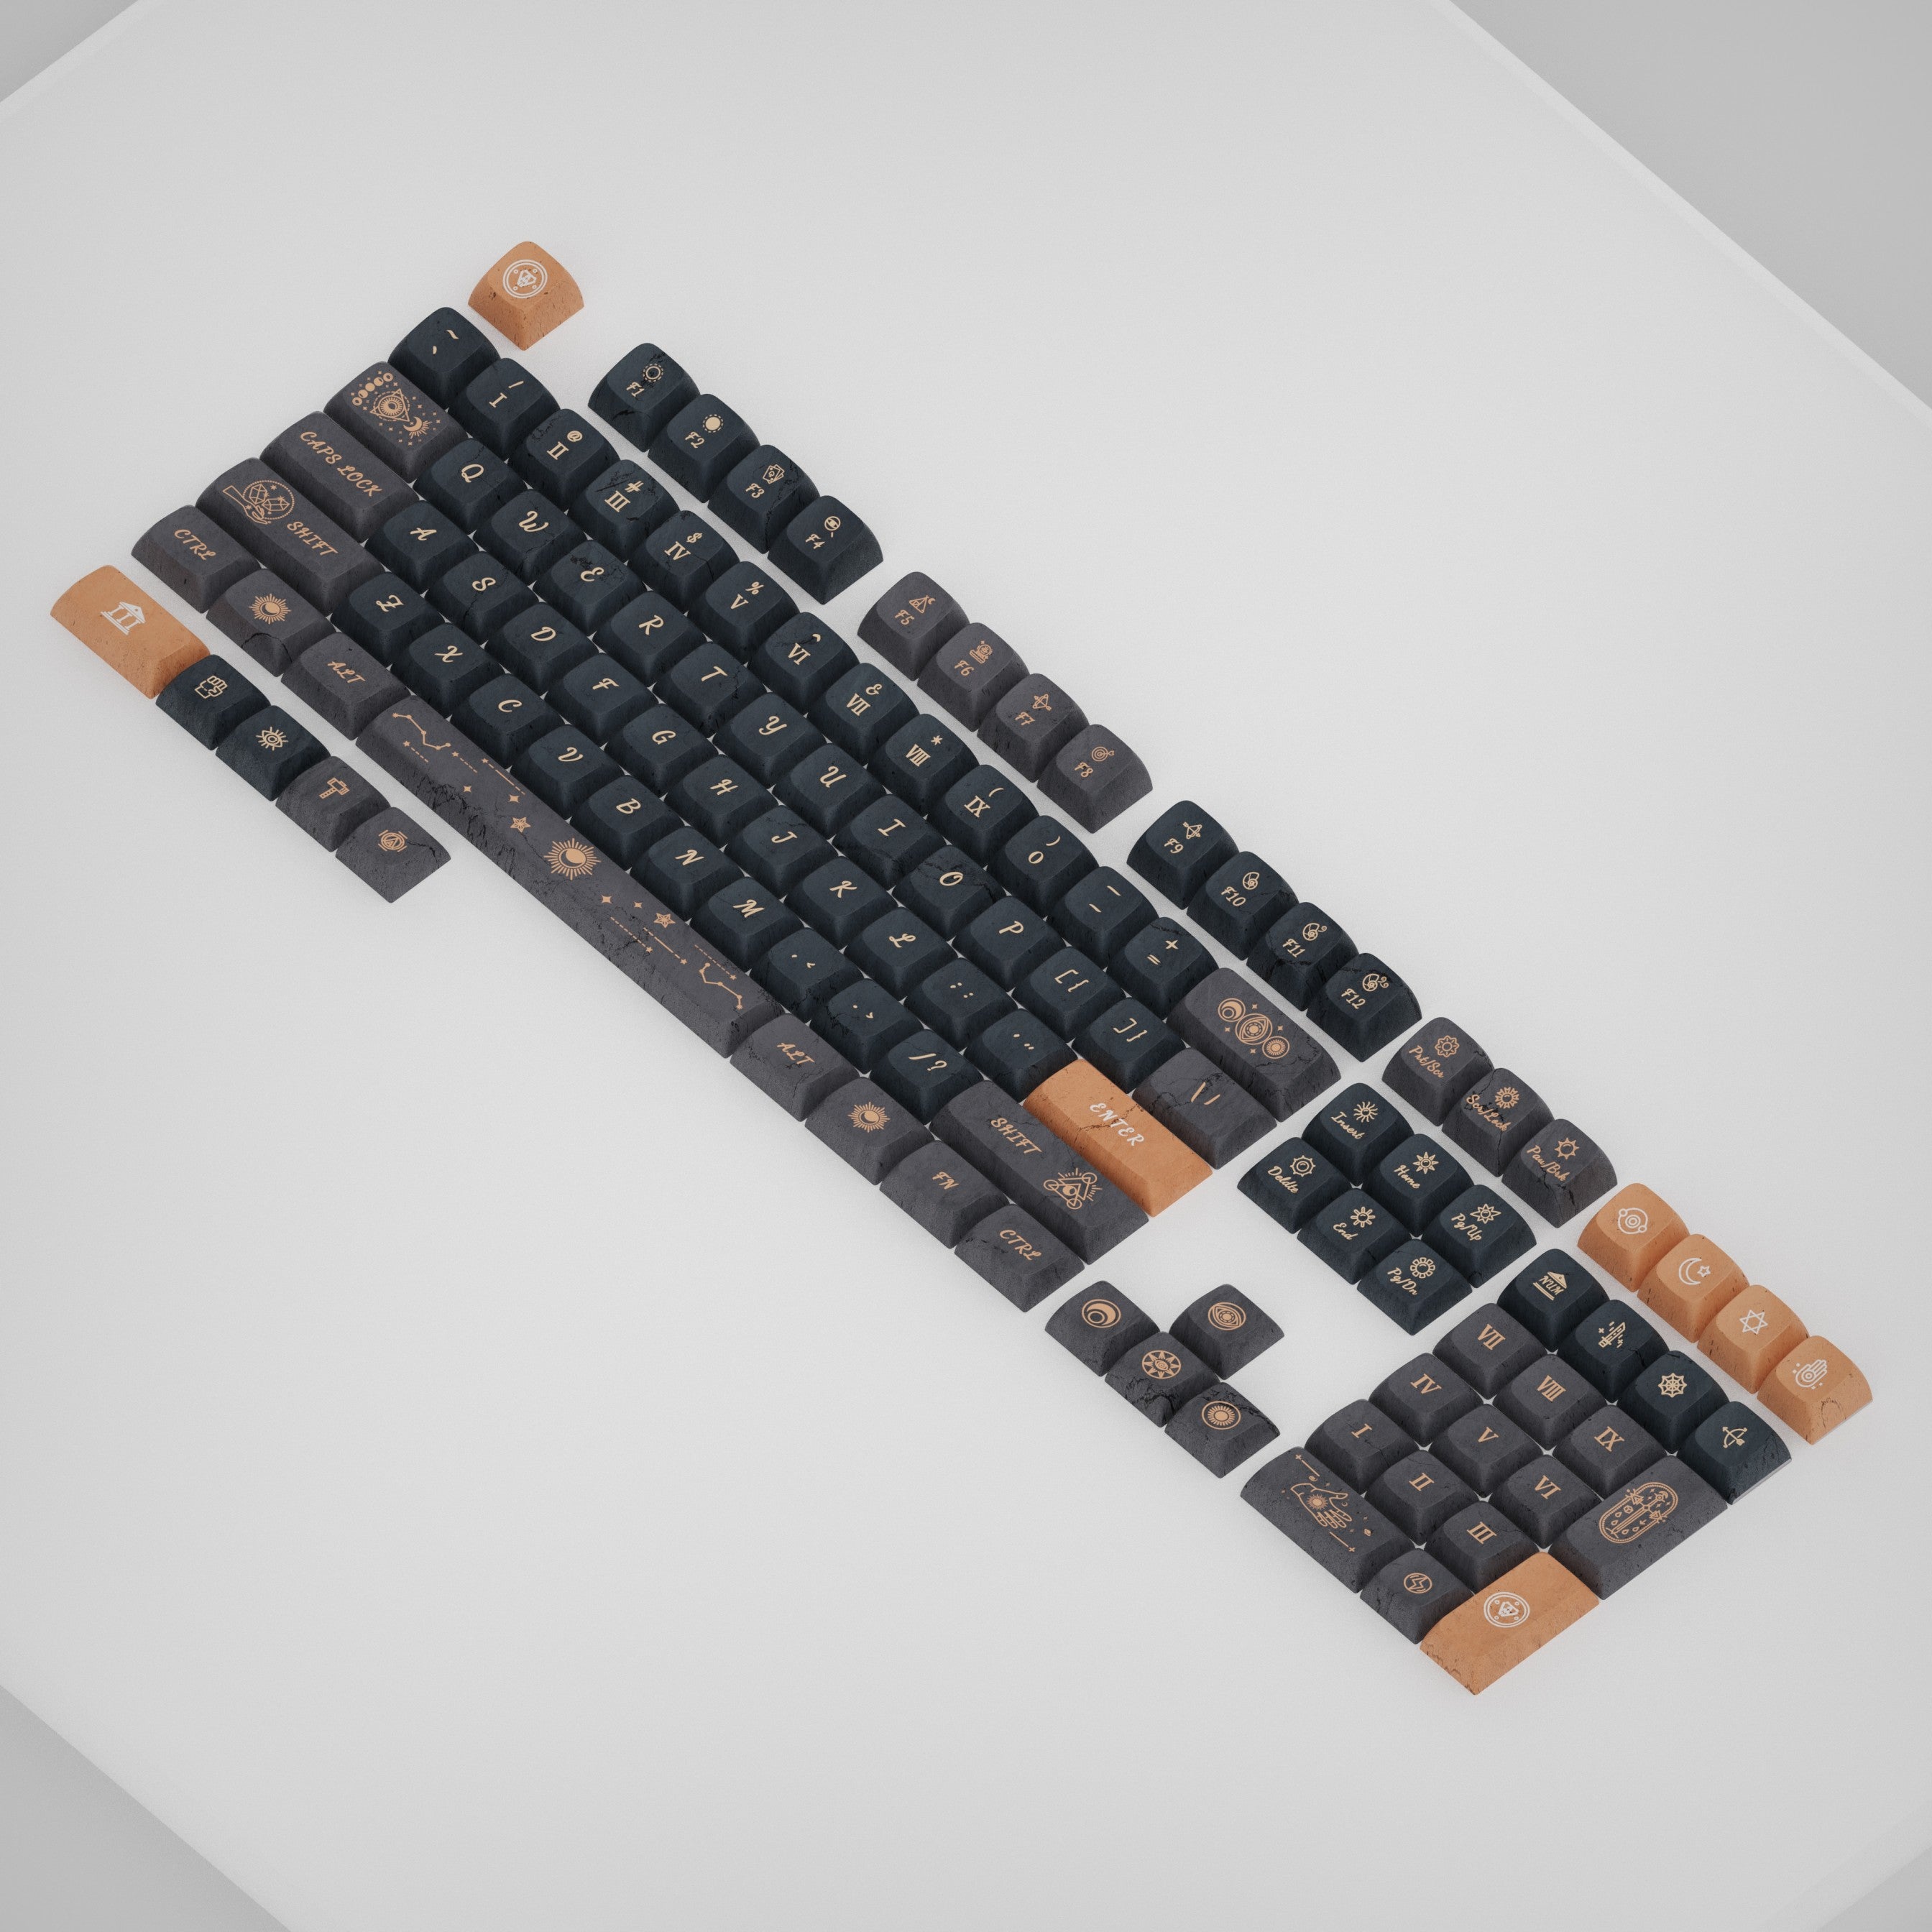 keysme custom mechanical keyboard kda profile dye-sub pbt keycap set black color